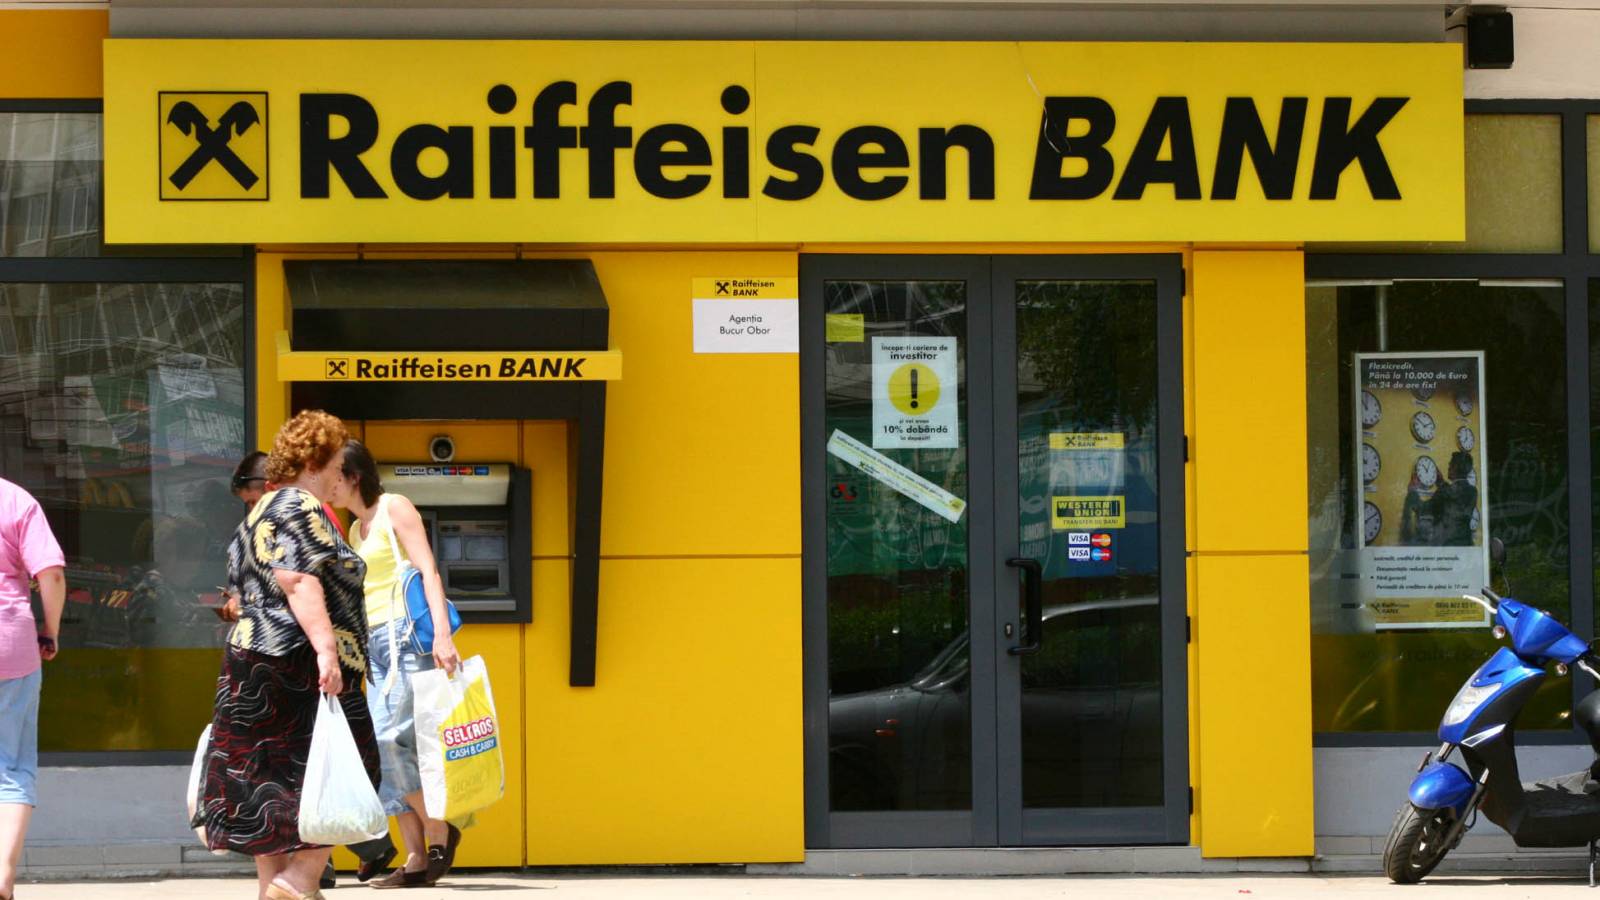 Raiffeisen Bank direct